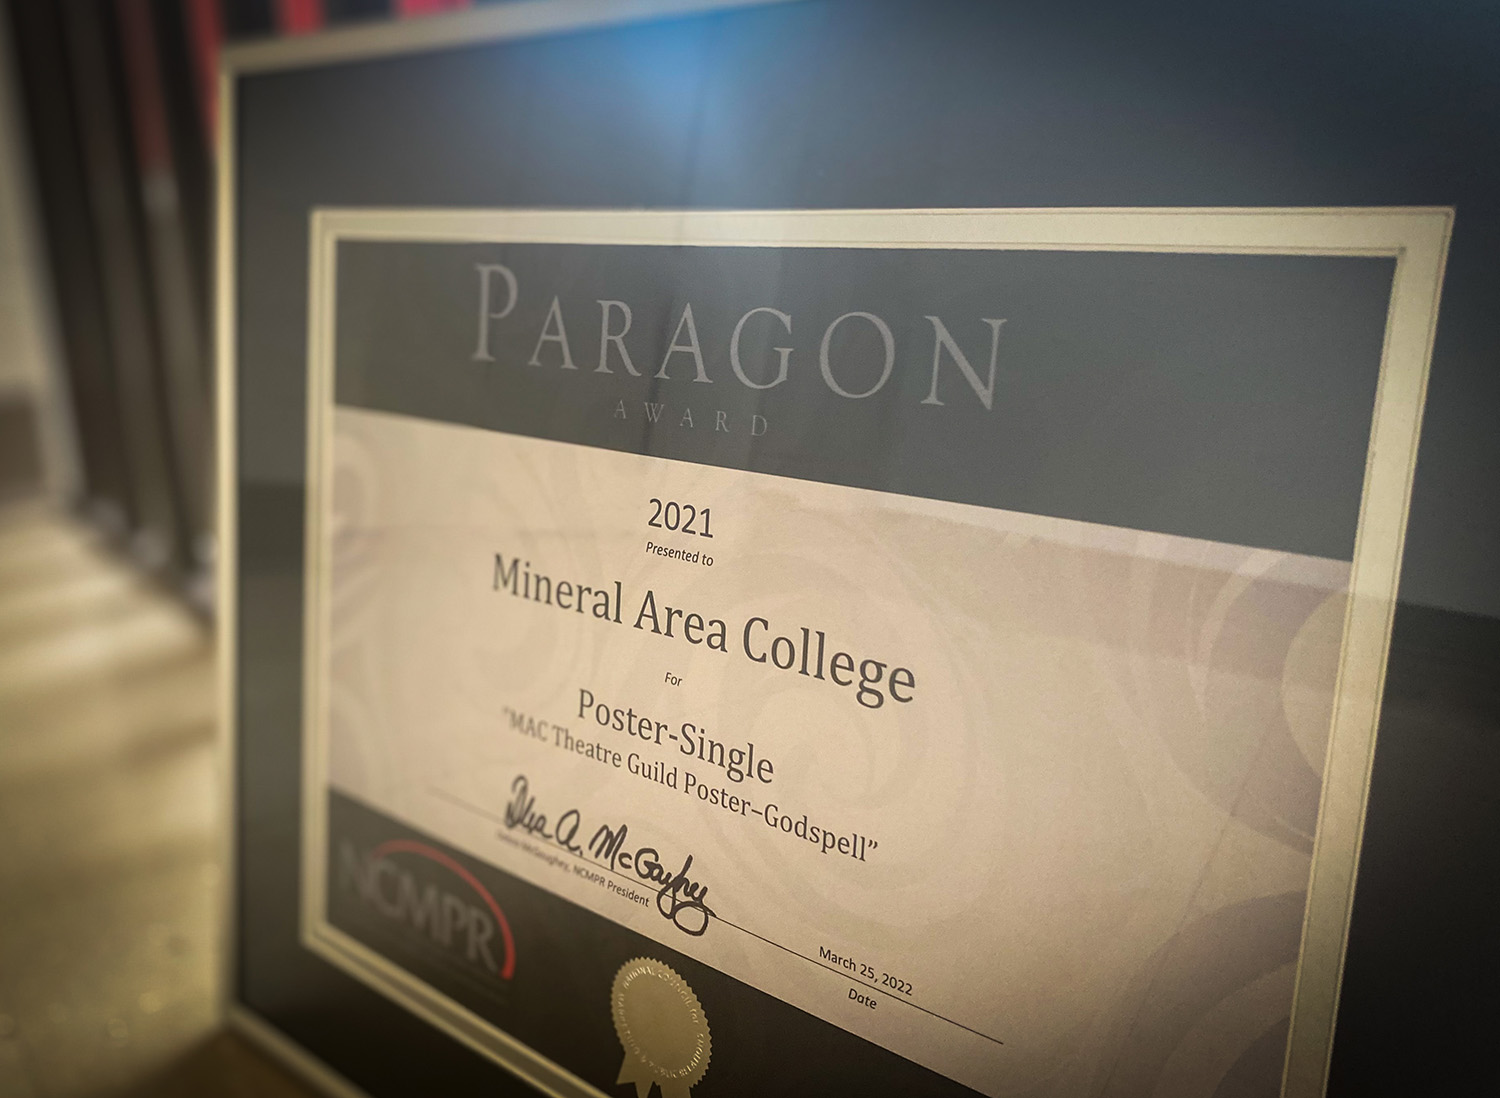 Image of Paragon Award Certificate